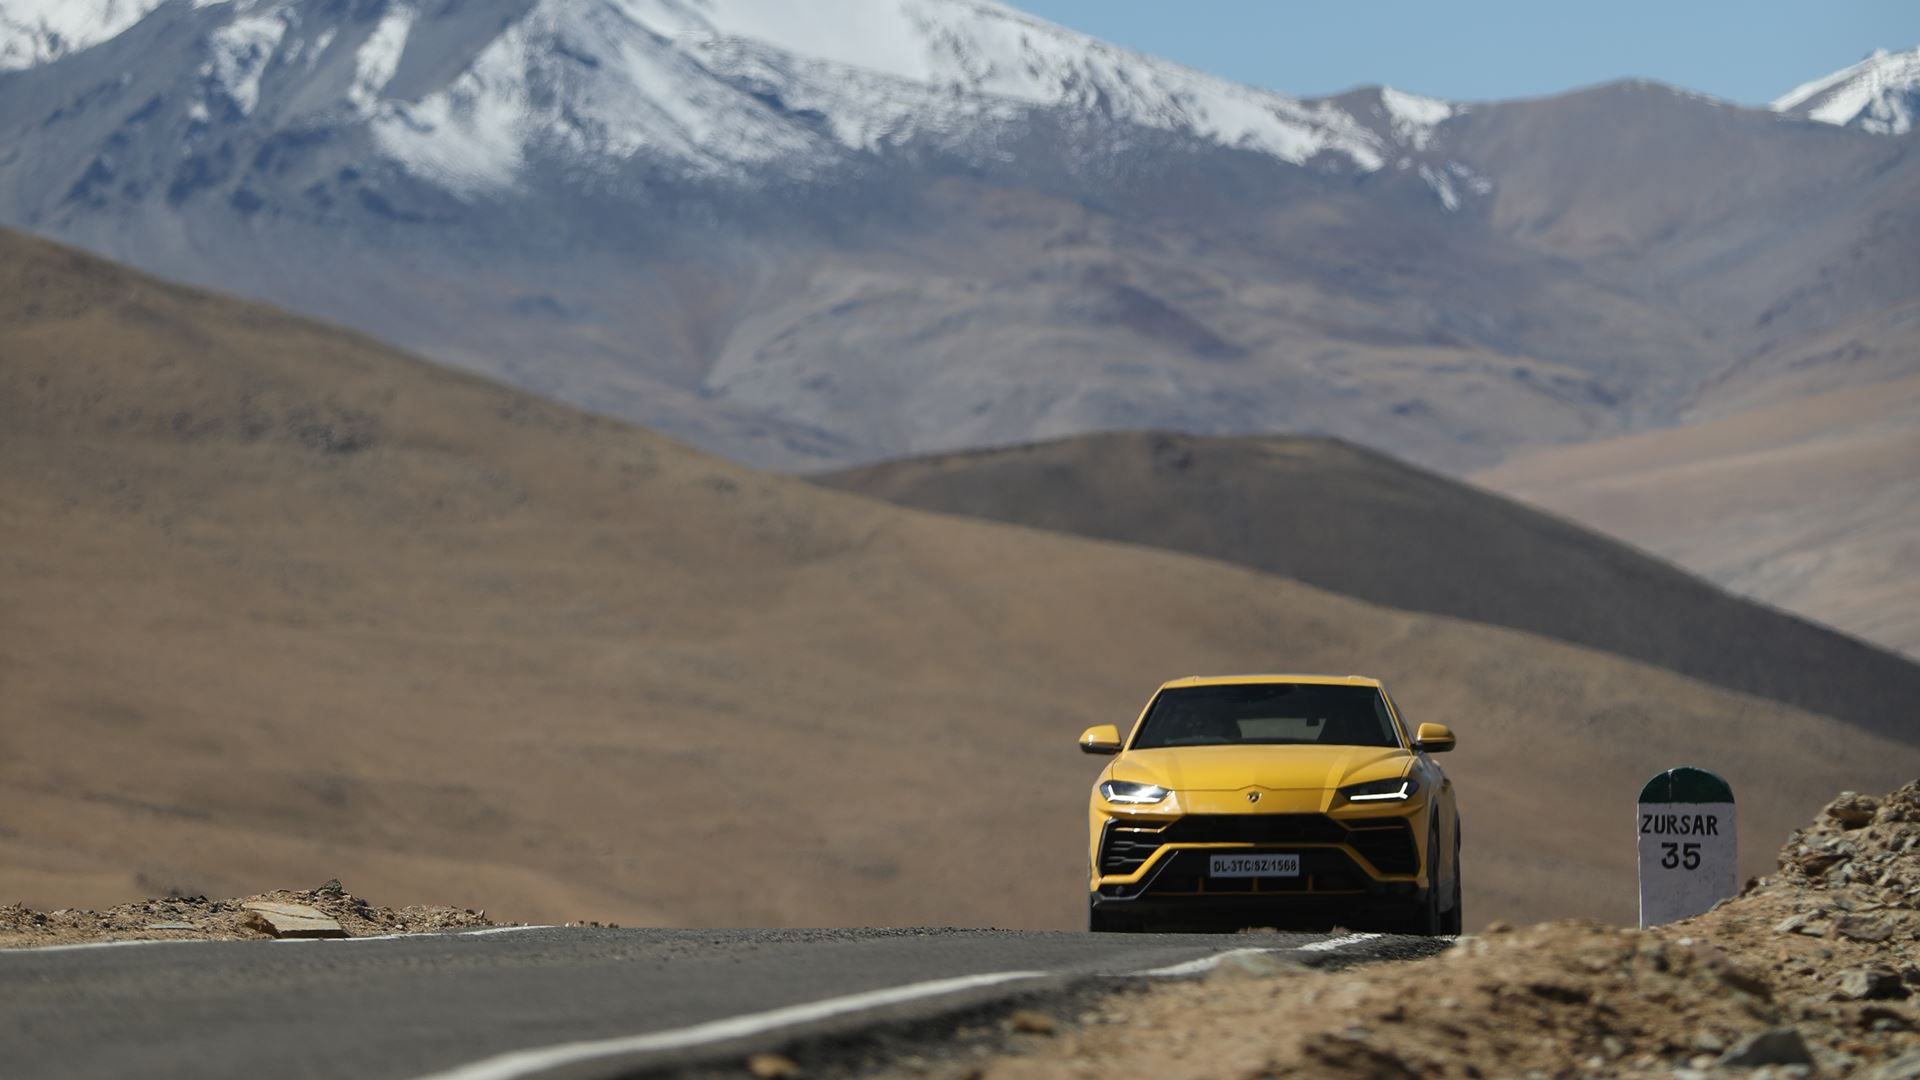 Lamborghini Urus unlocks the world’s highest driveable road in India - Image 7